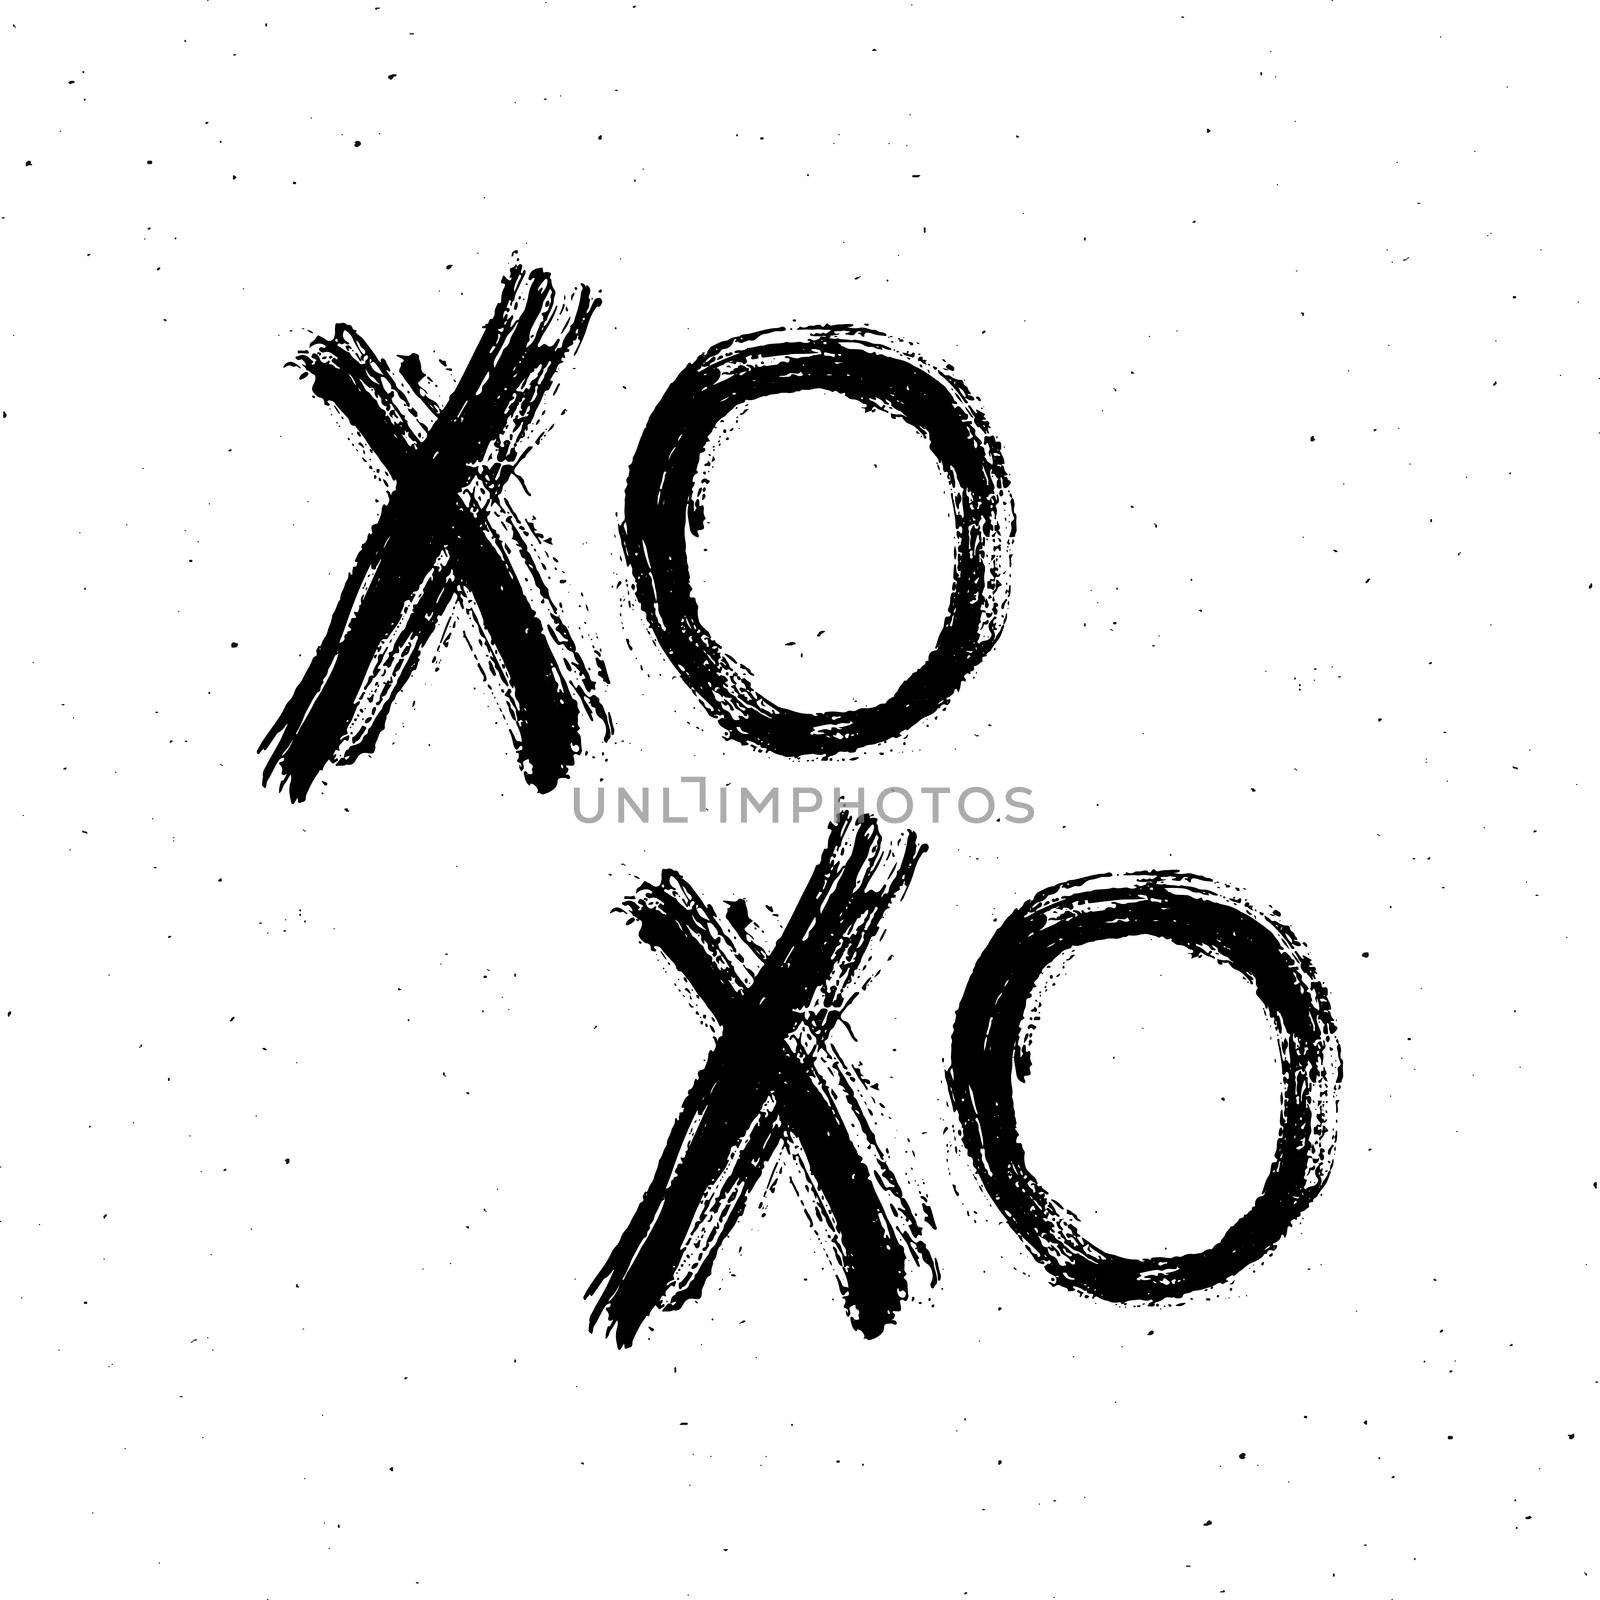 XOXO brush lettering sign, Grunge calligraphic hugs and kisses Phrase, Internet slang abbreviation XOXO symbols, vector illustration isolated on white background.